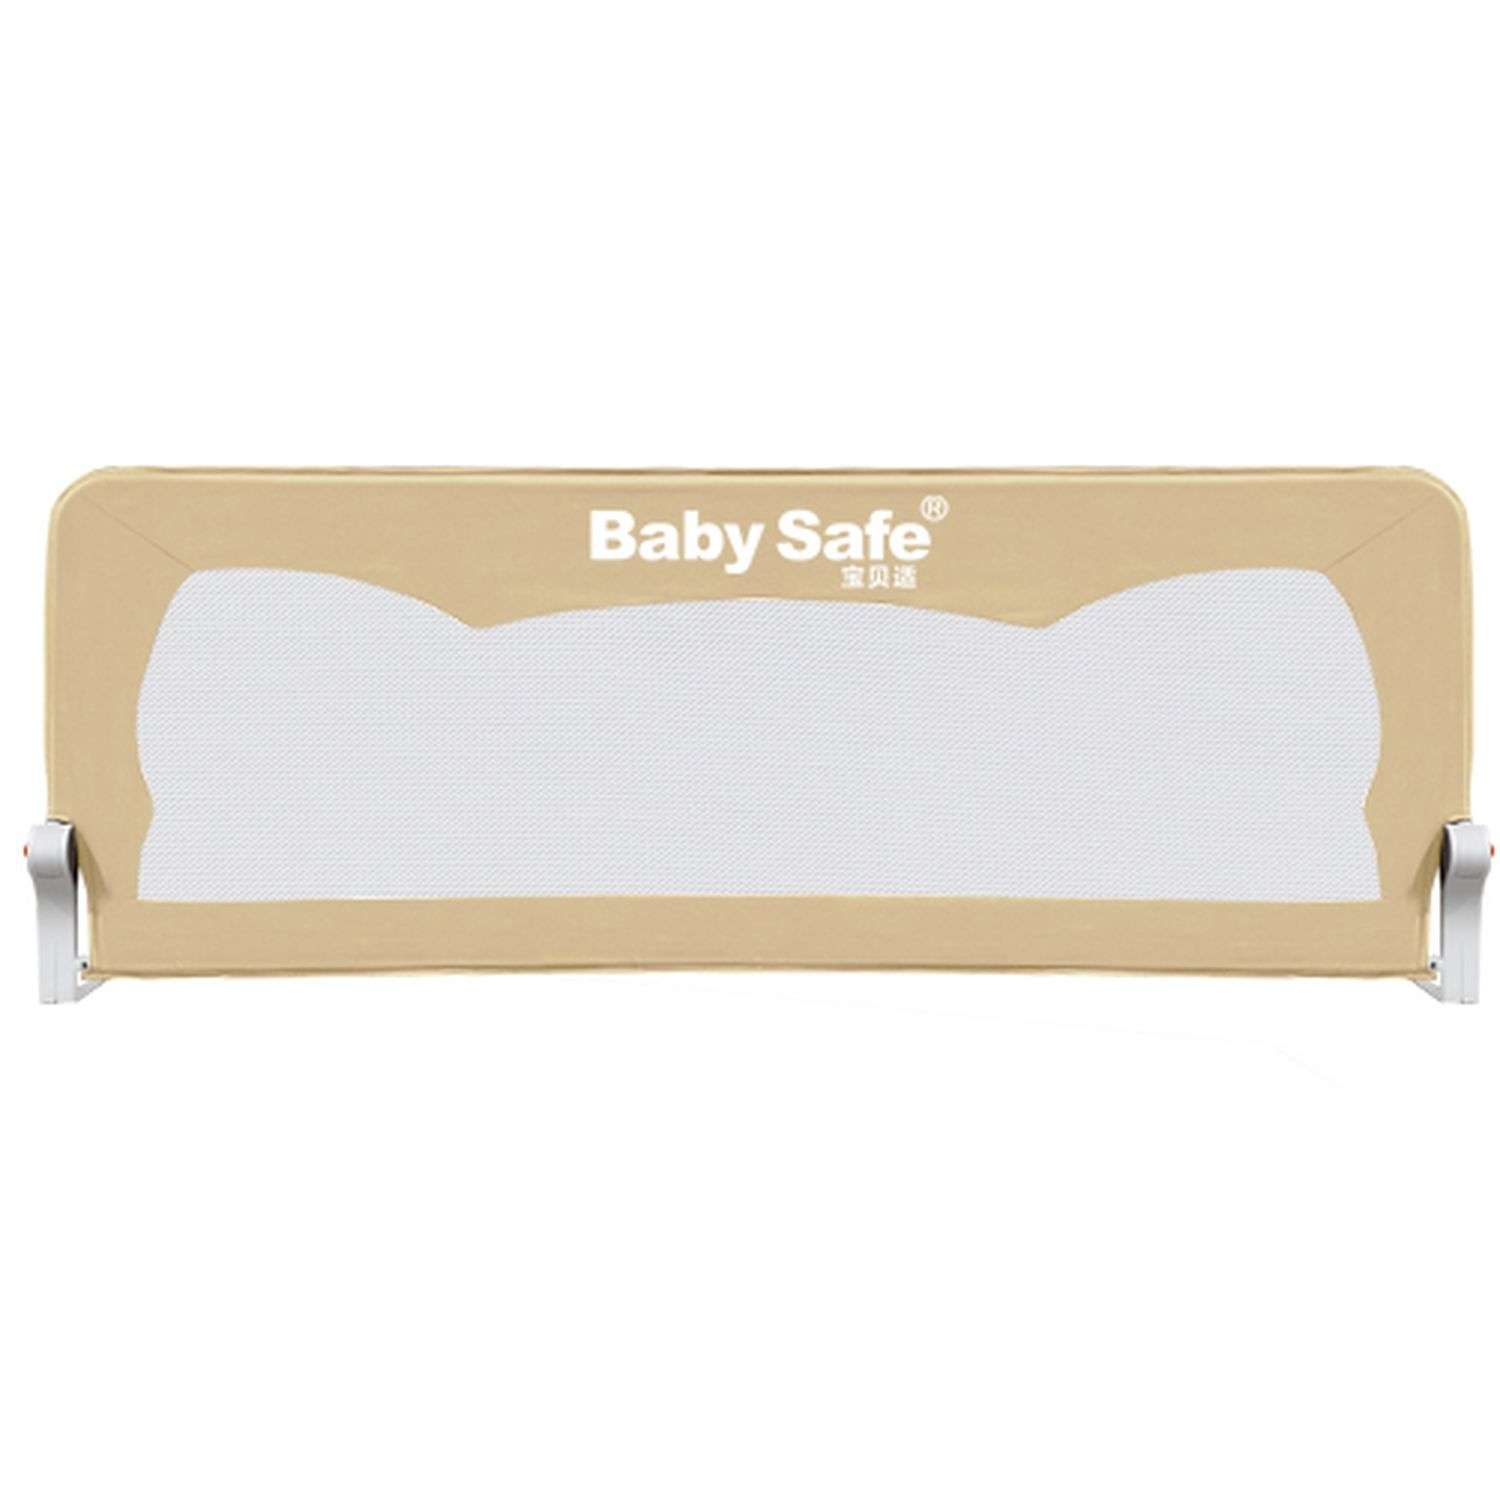 Барьер защитный для кровати Baby Safe защитный для кровати Ушки 180х66 бежевый - фото 2